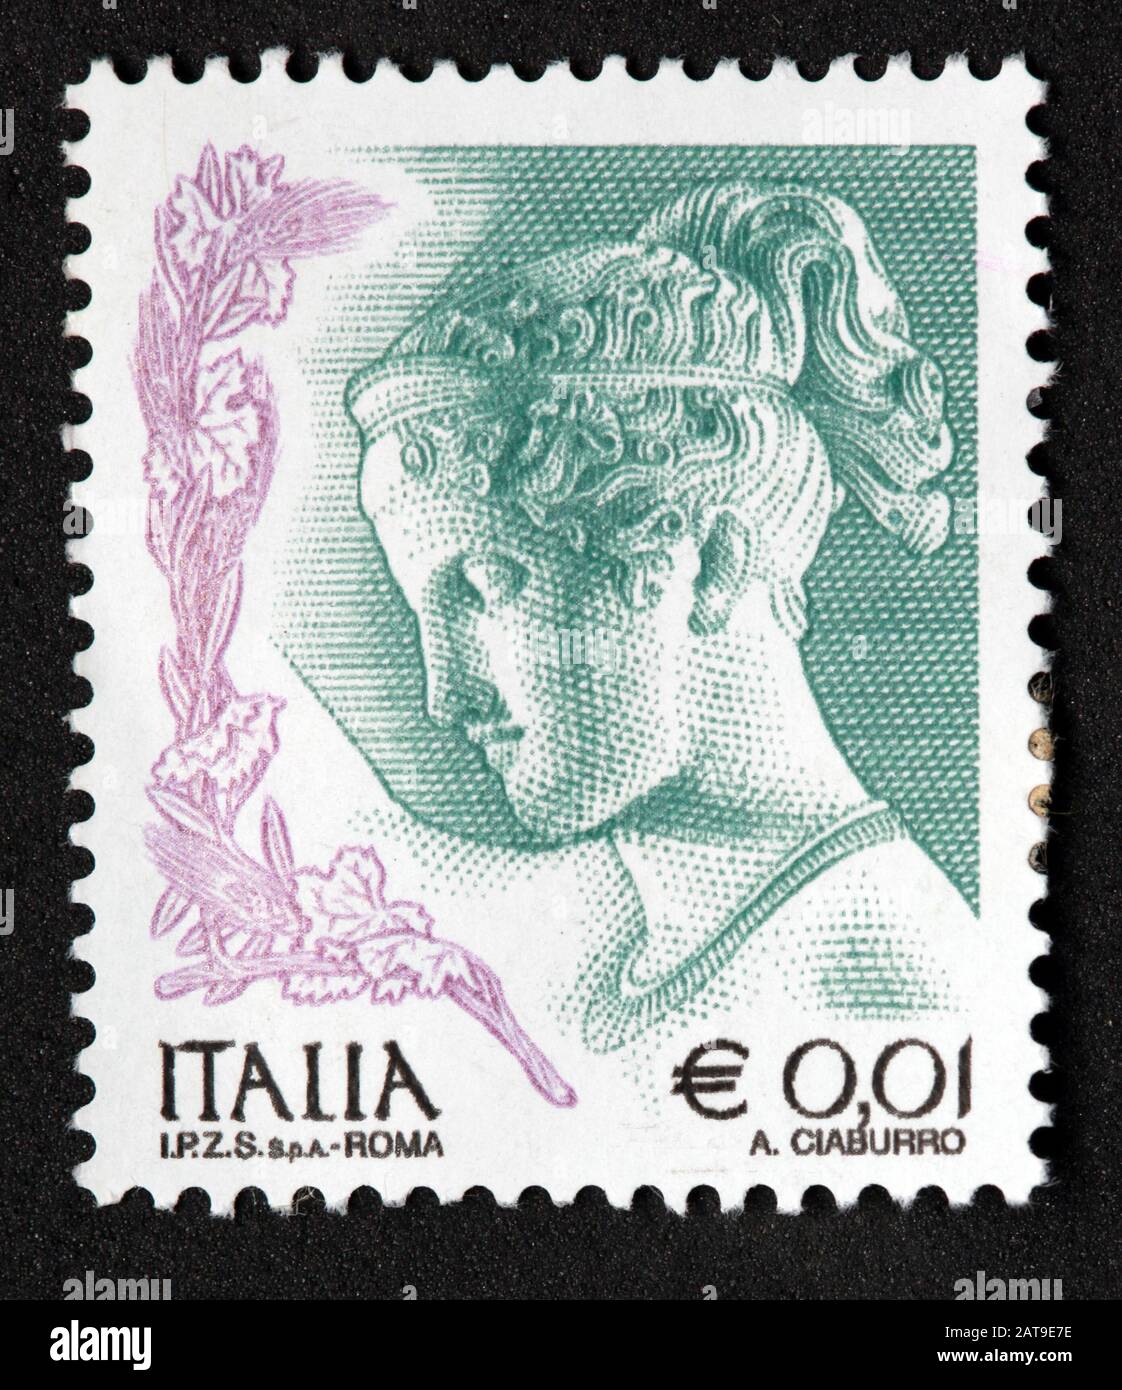 Italienischer Stempel, poste Italia verwendete und festgesetzte Stempel, Italia E 0,01 A.Ciaburro Stockfoto